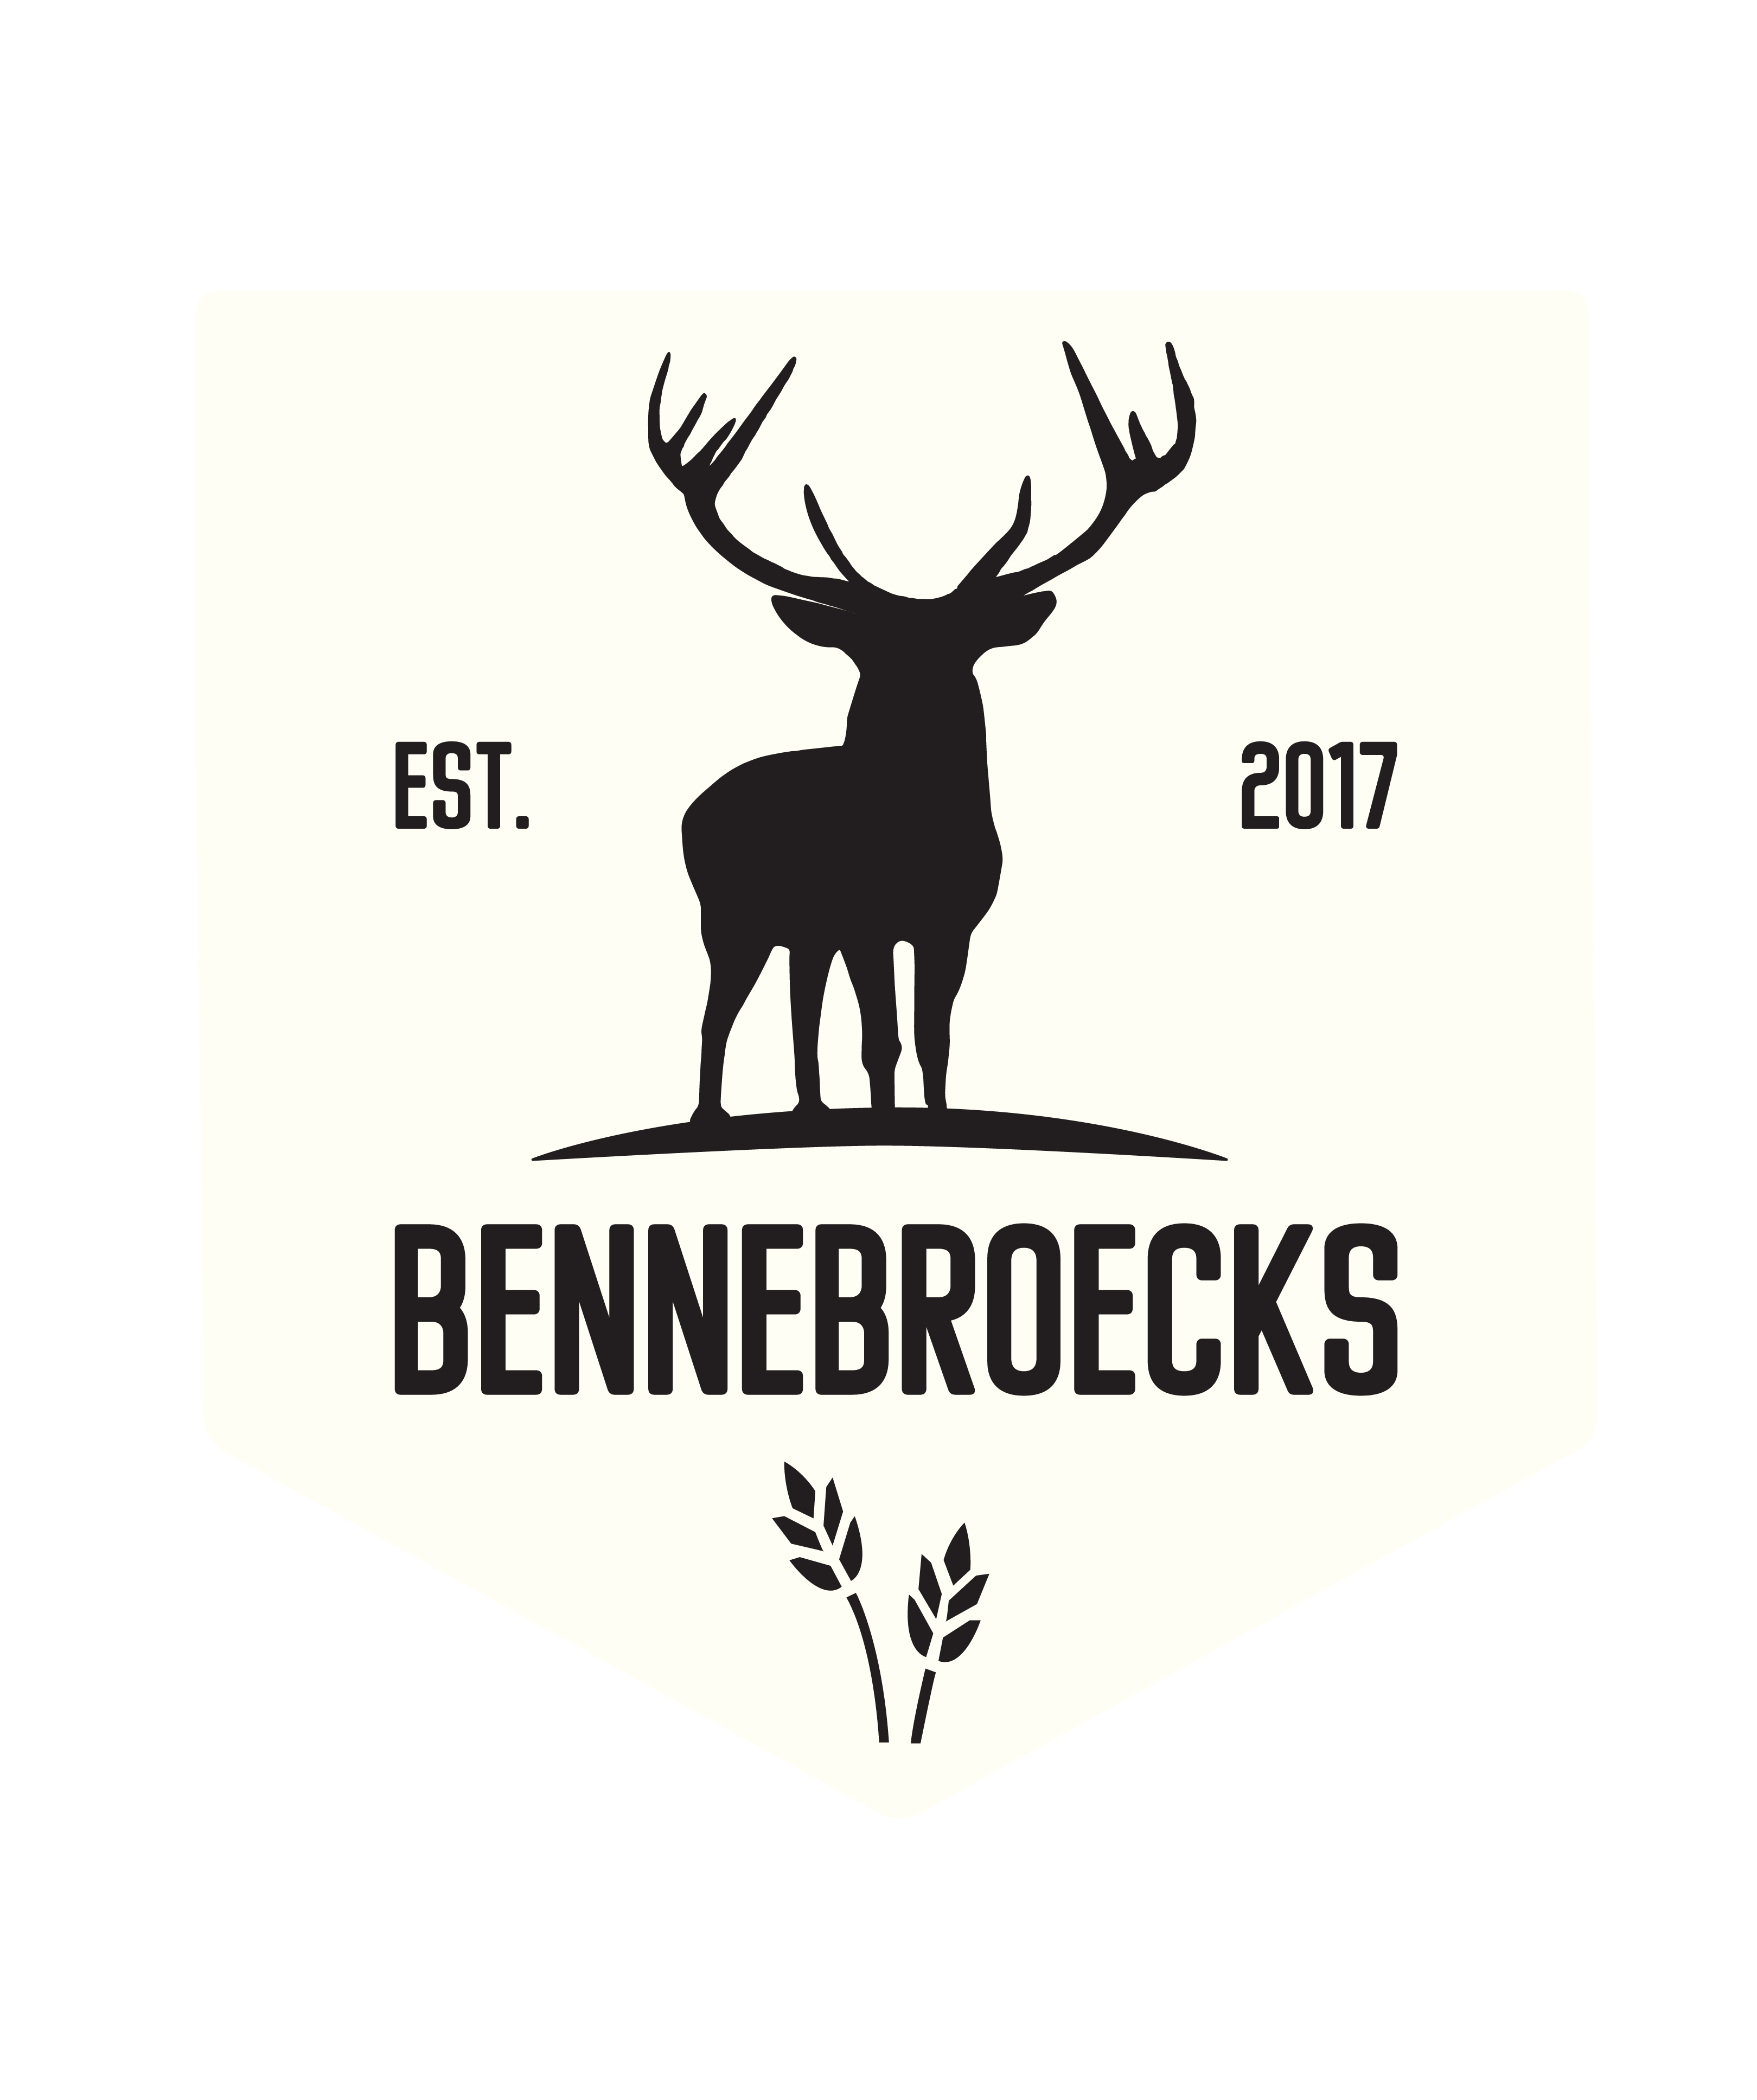 Bennebroecks